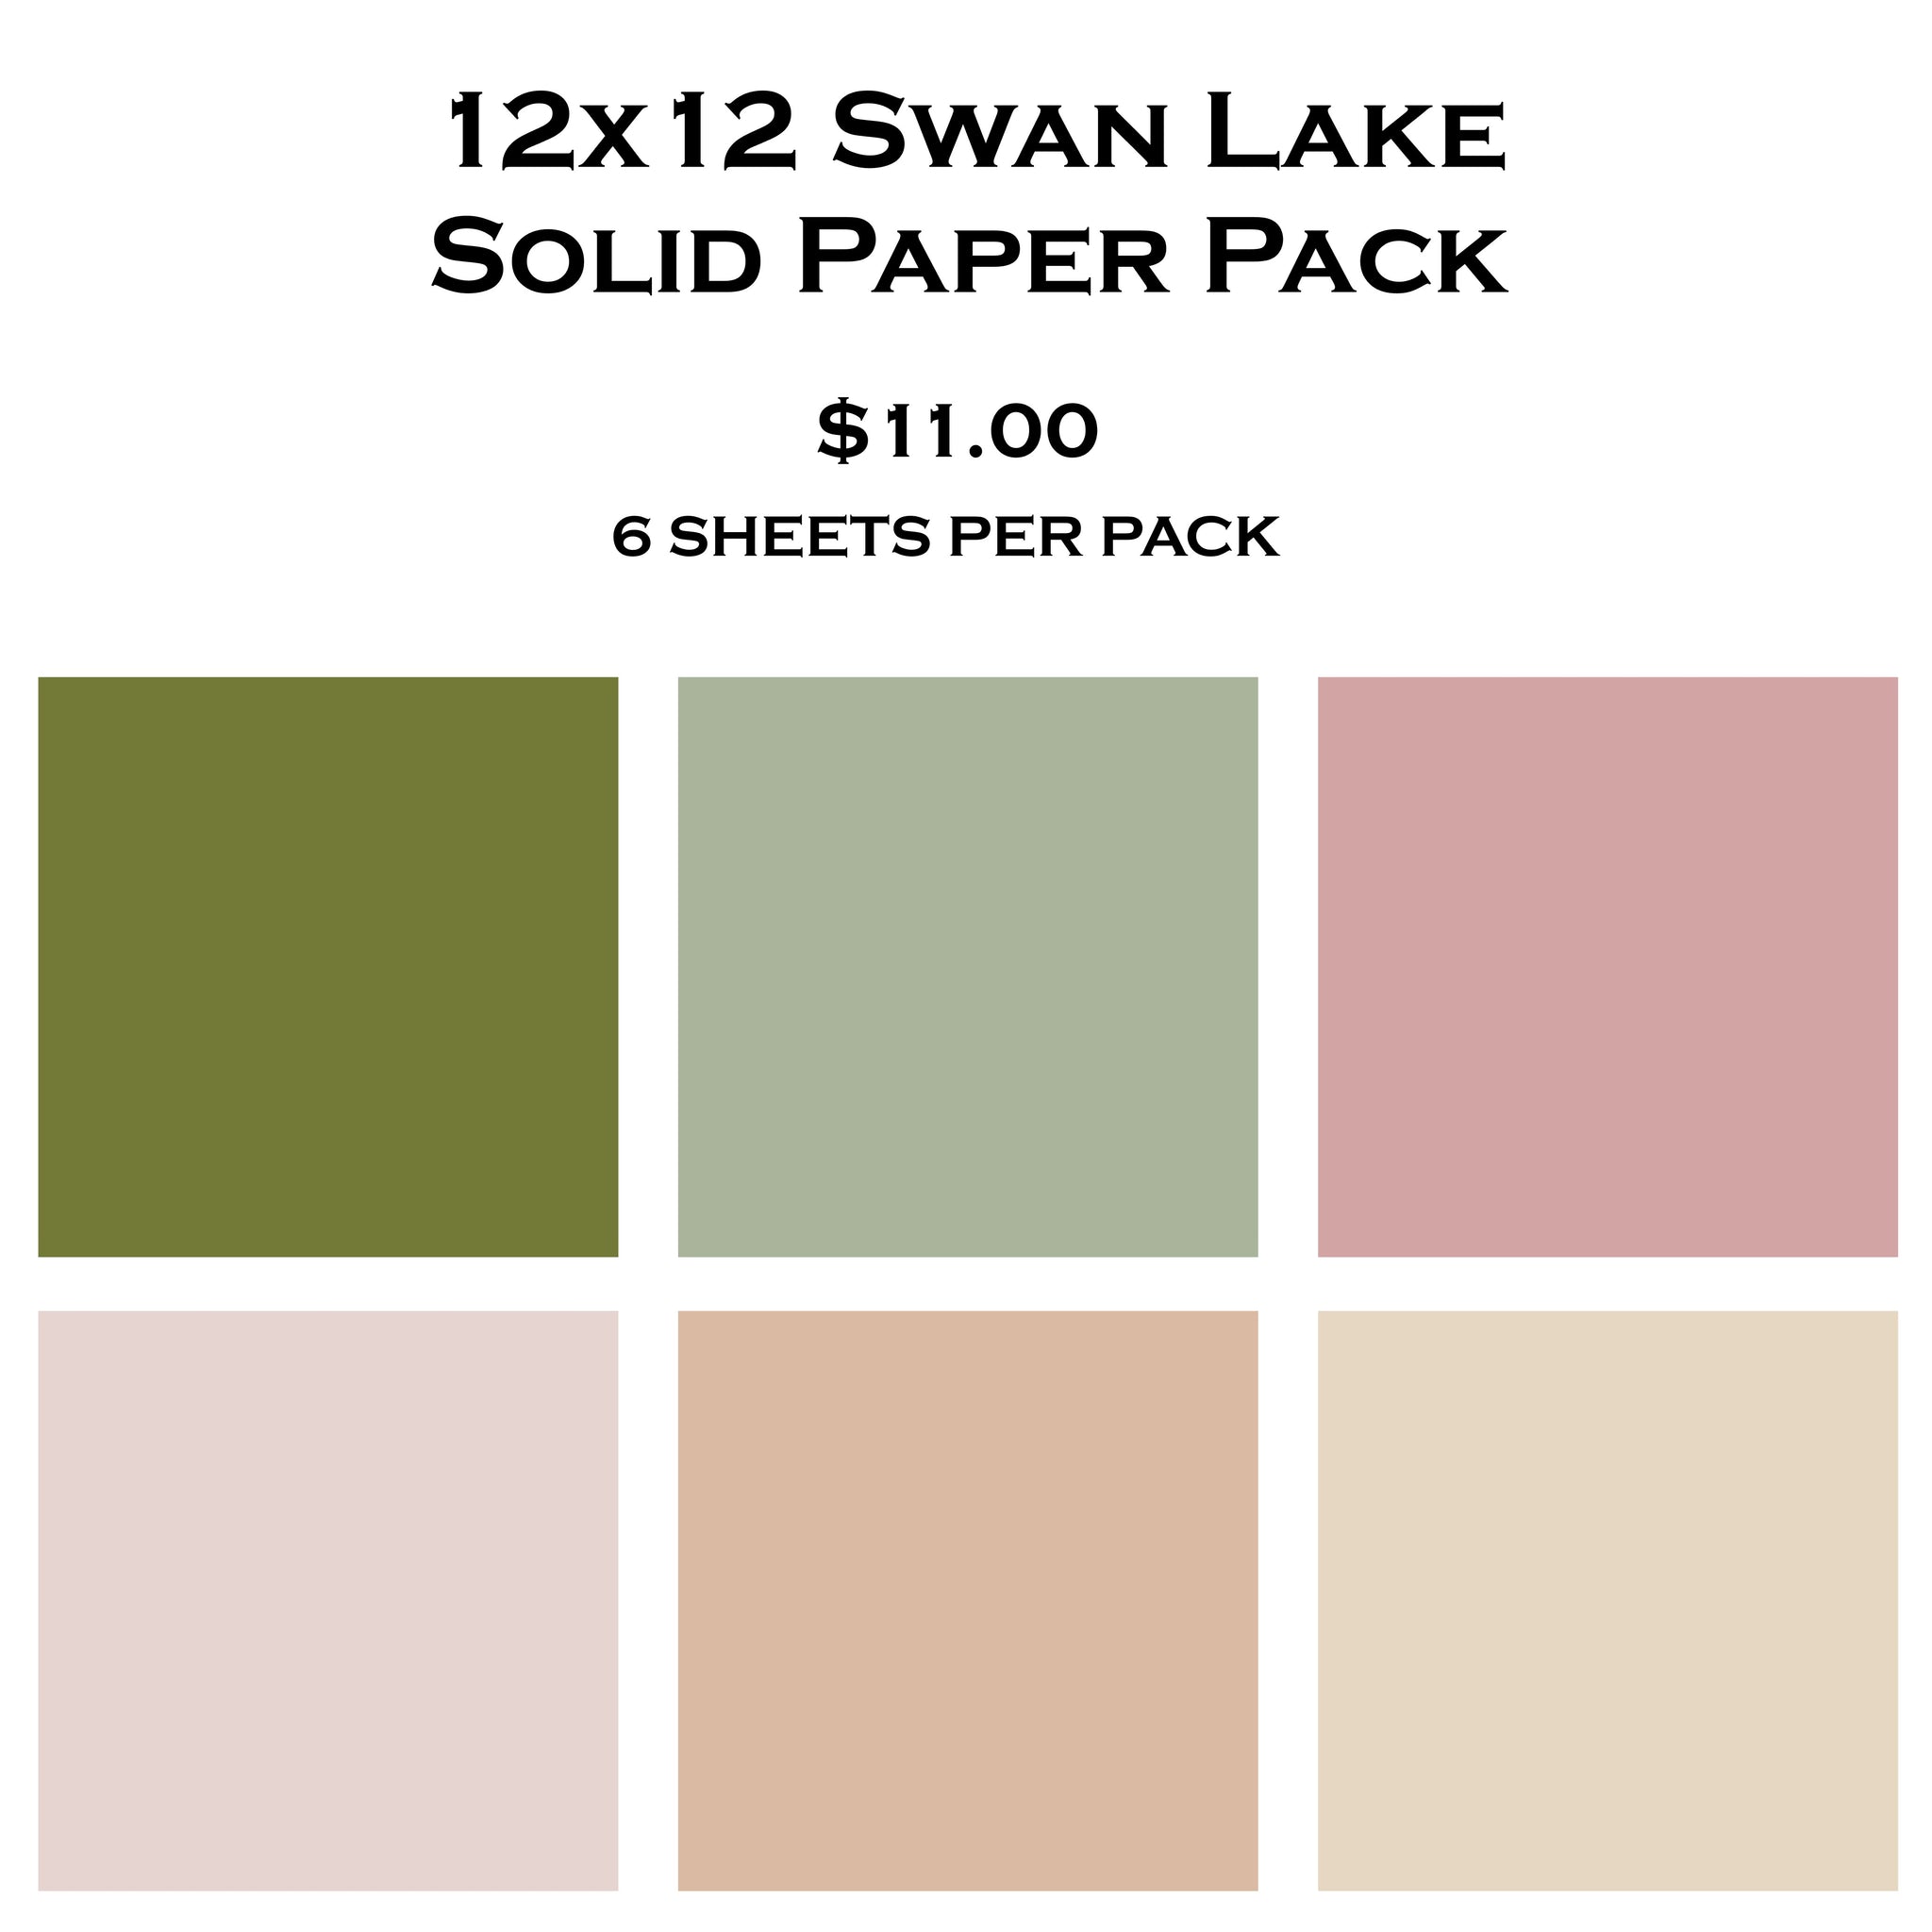 Swan Lake 12x12 Solid Paper Pack